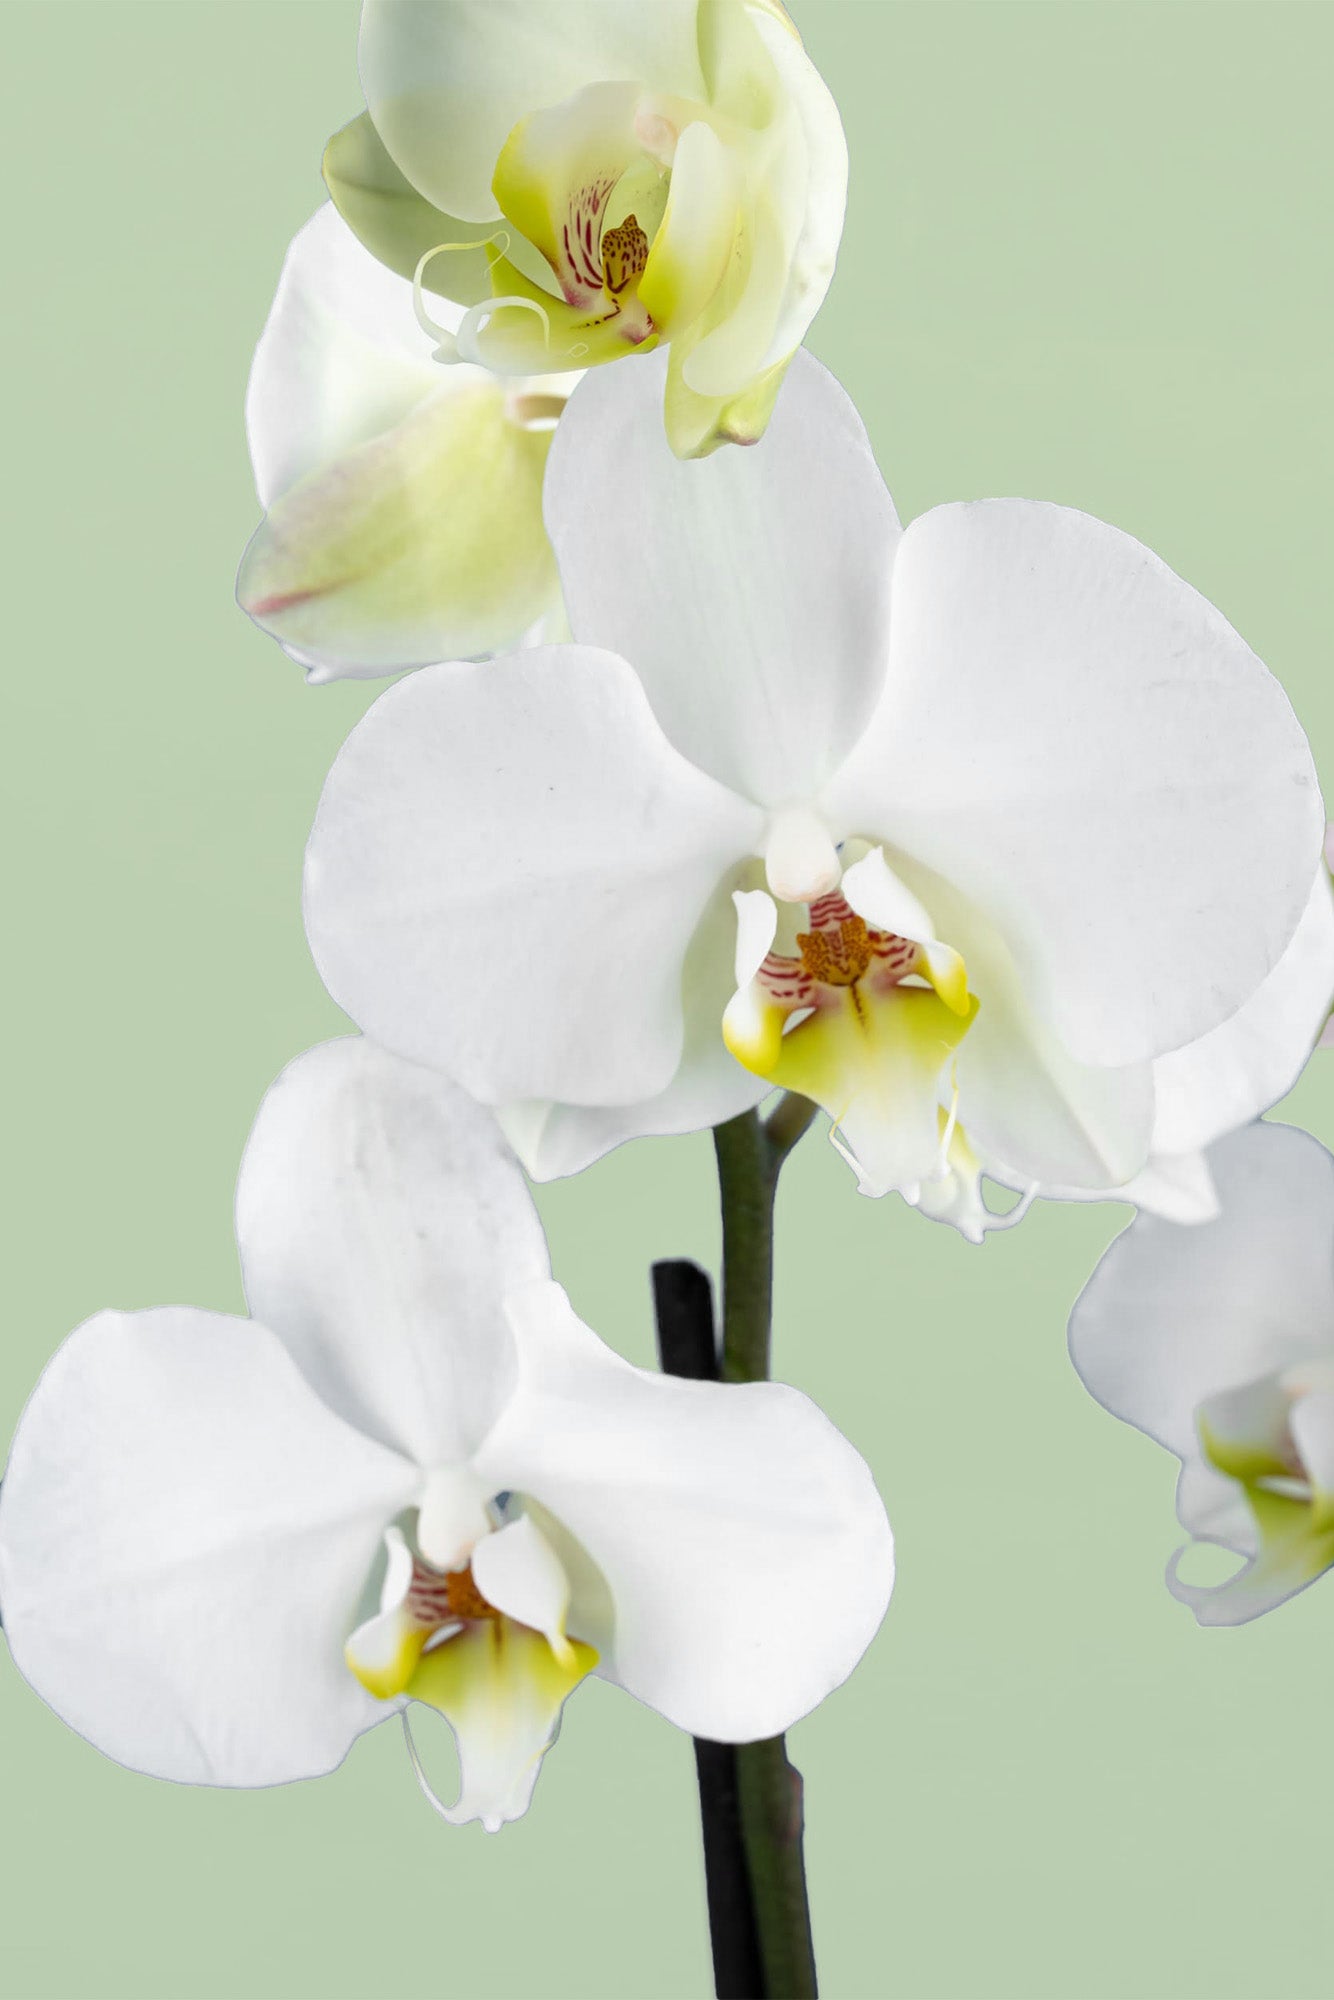 Remedios Varo con Maceta de Cara - Orquídea